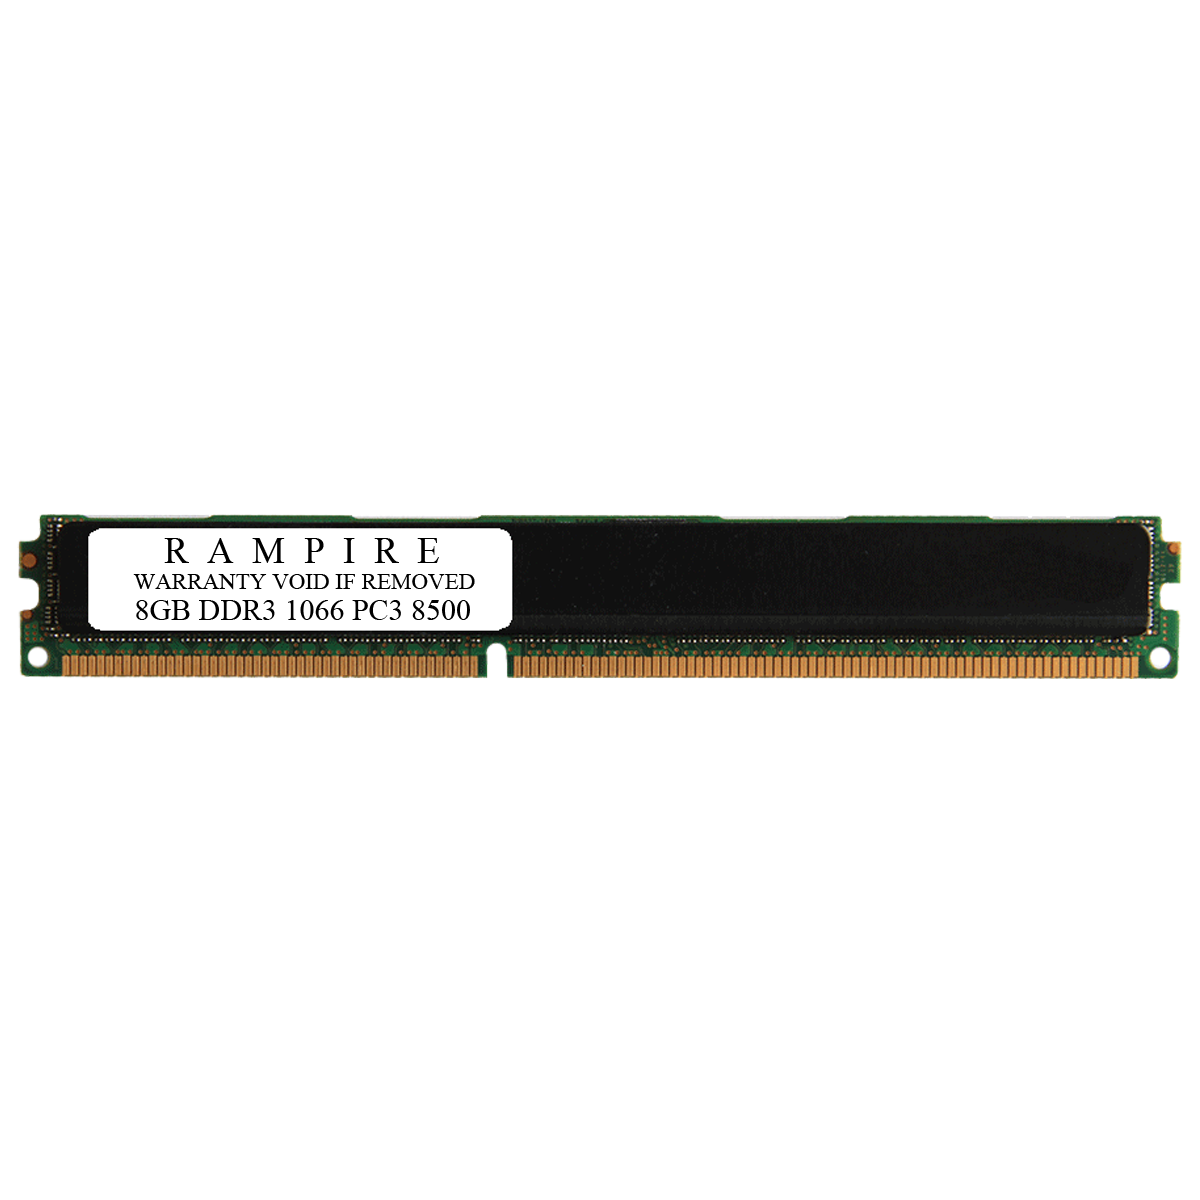 RAMPIRE 8GB DDR3 1066 (PC3 8500) 240-Pin SDRAM 4Rx8 VLP (Low Profile) 1.35V ECC Registered Server Memory